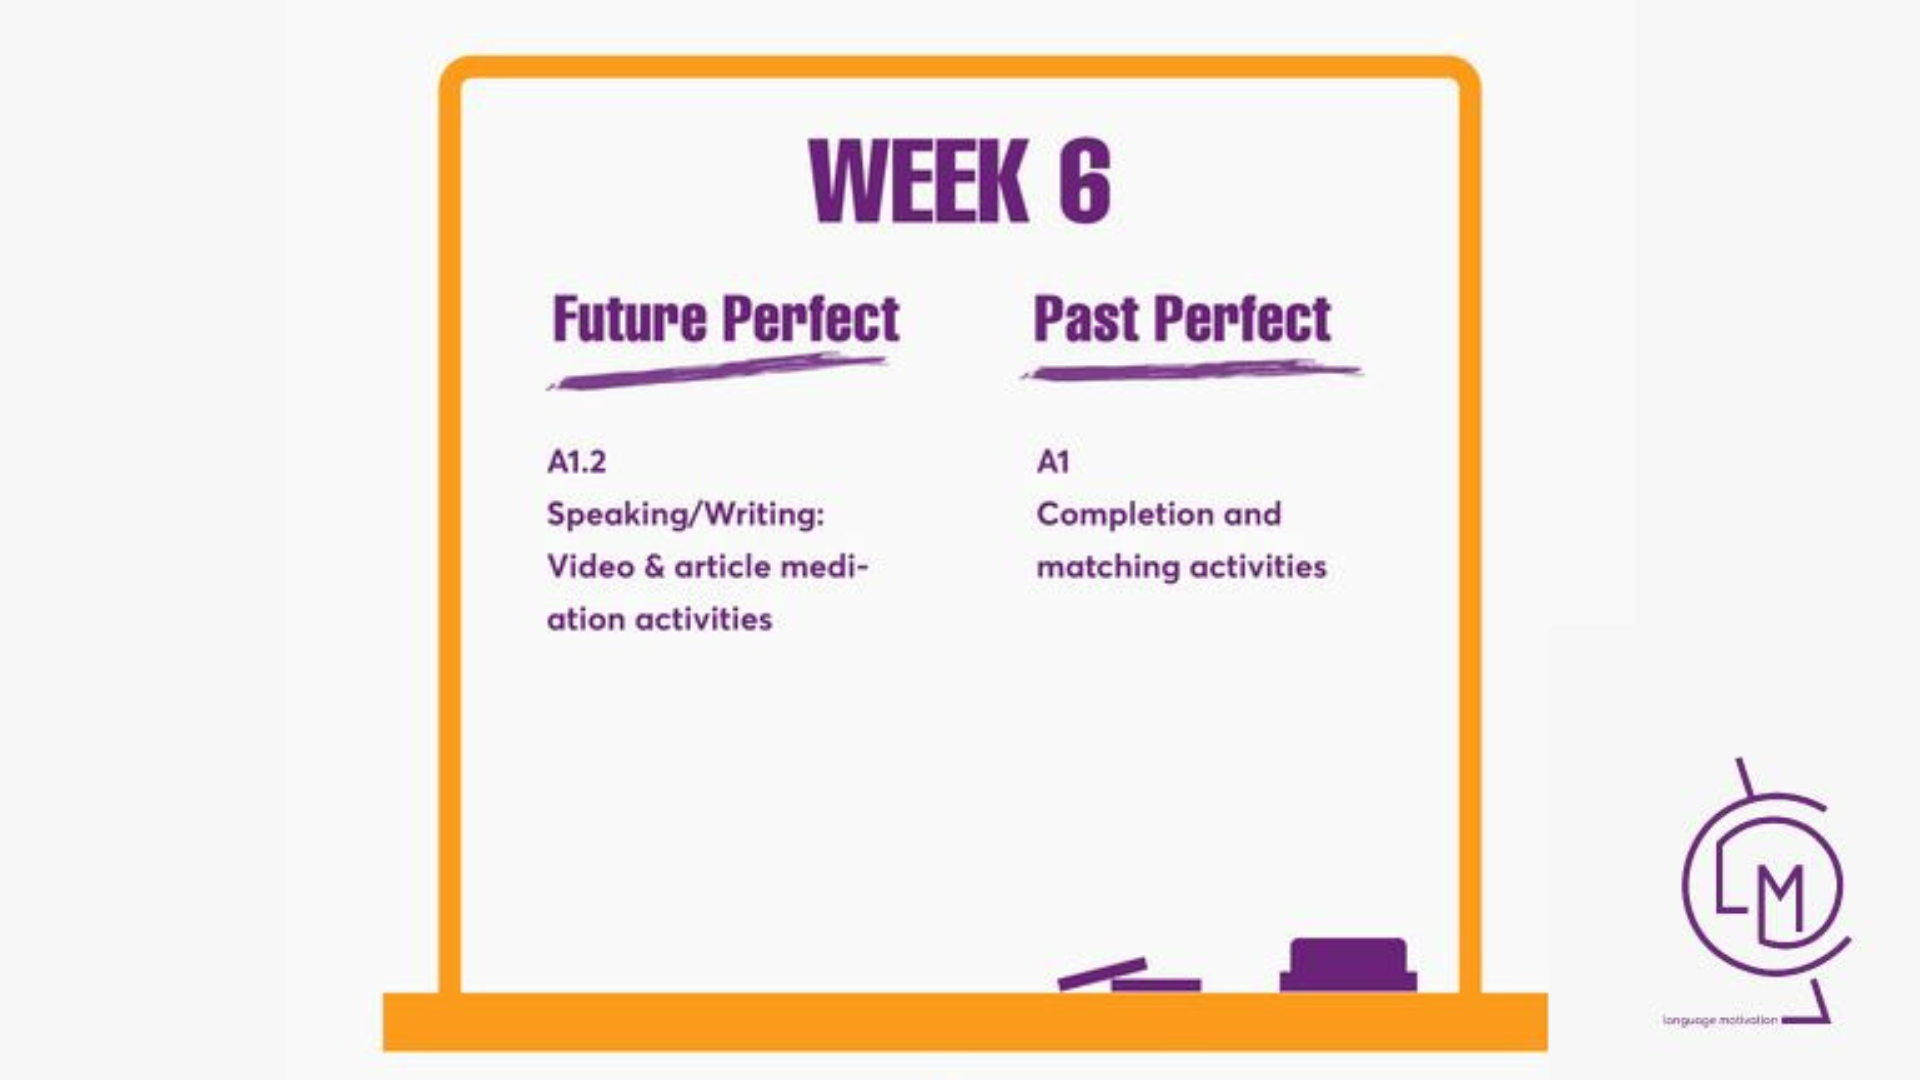 Future Perfect vs Past Perfect -> Week 6